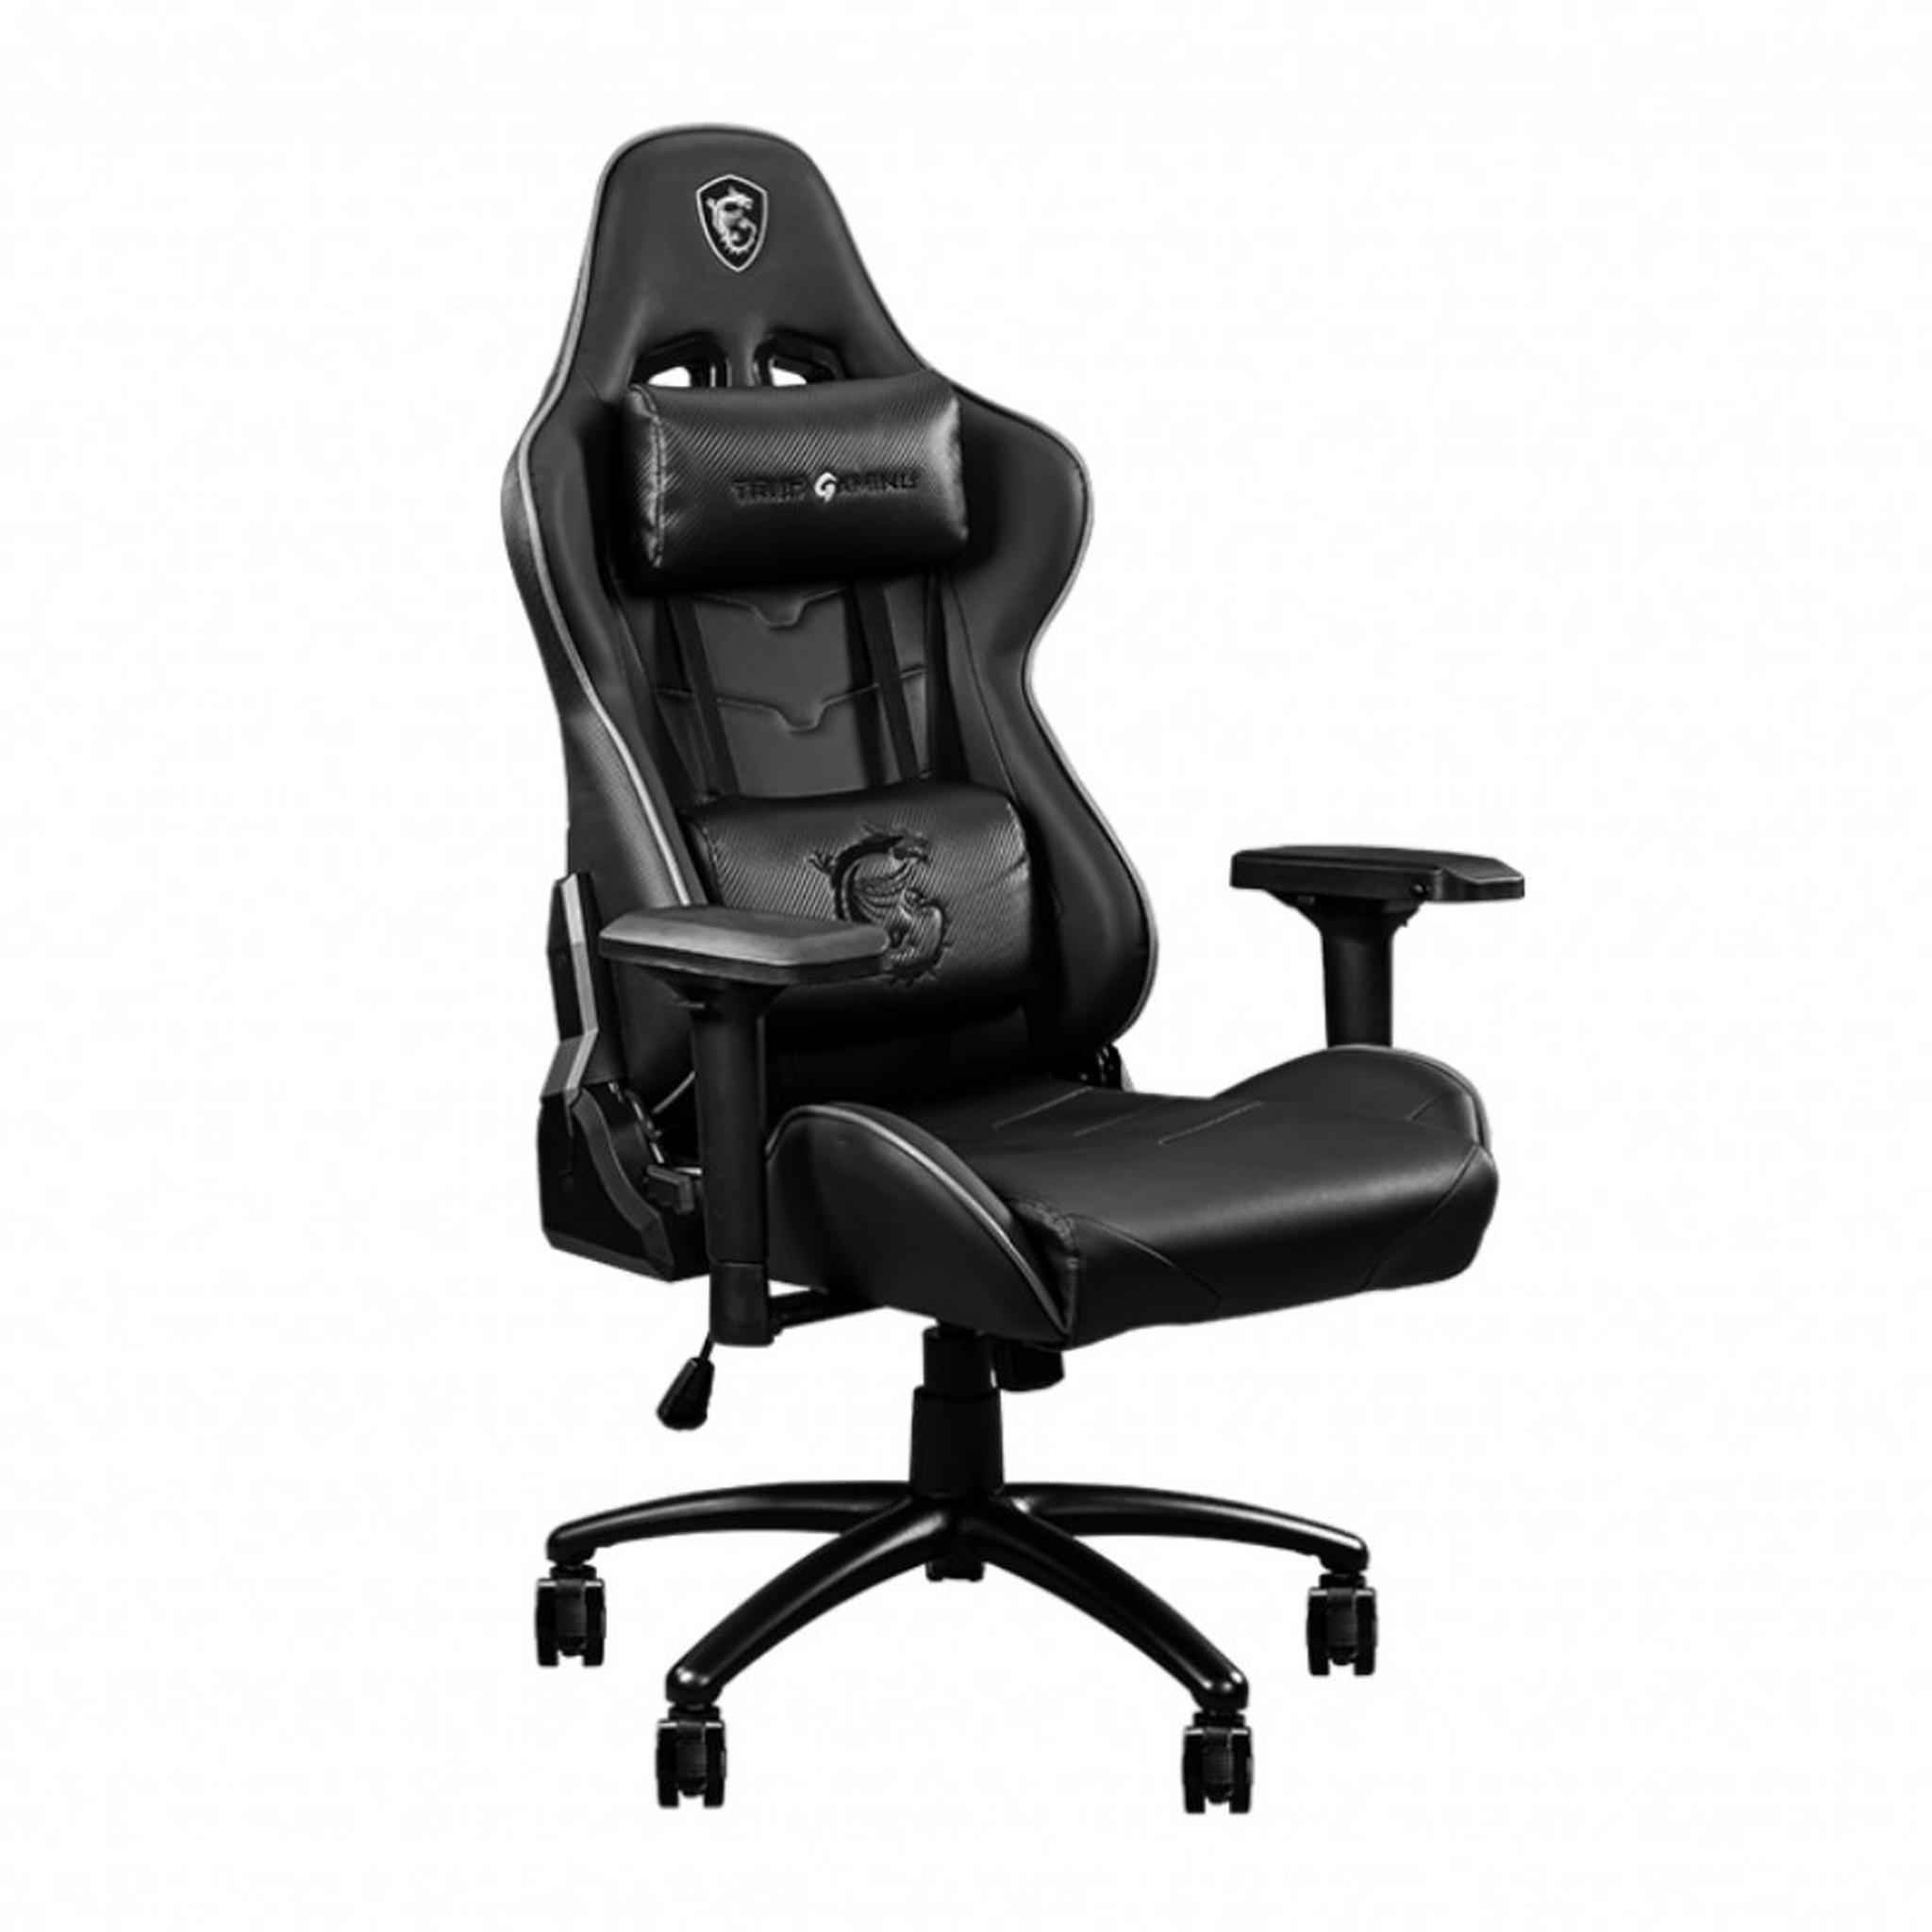 MSI MAG-CH120-I Gaming Chair - Black